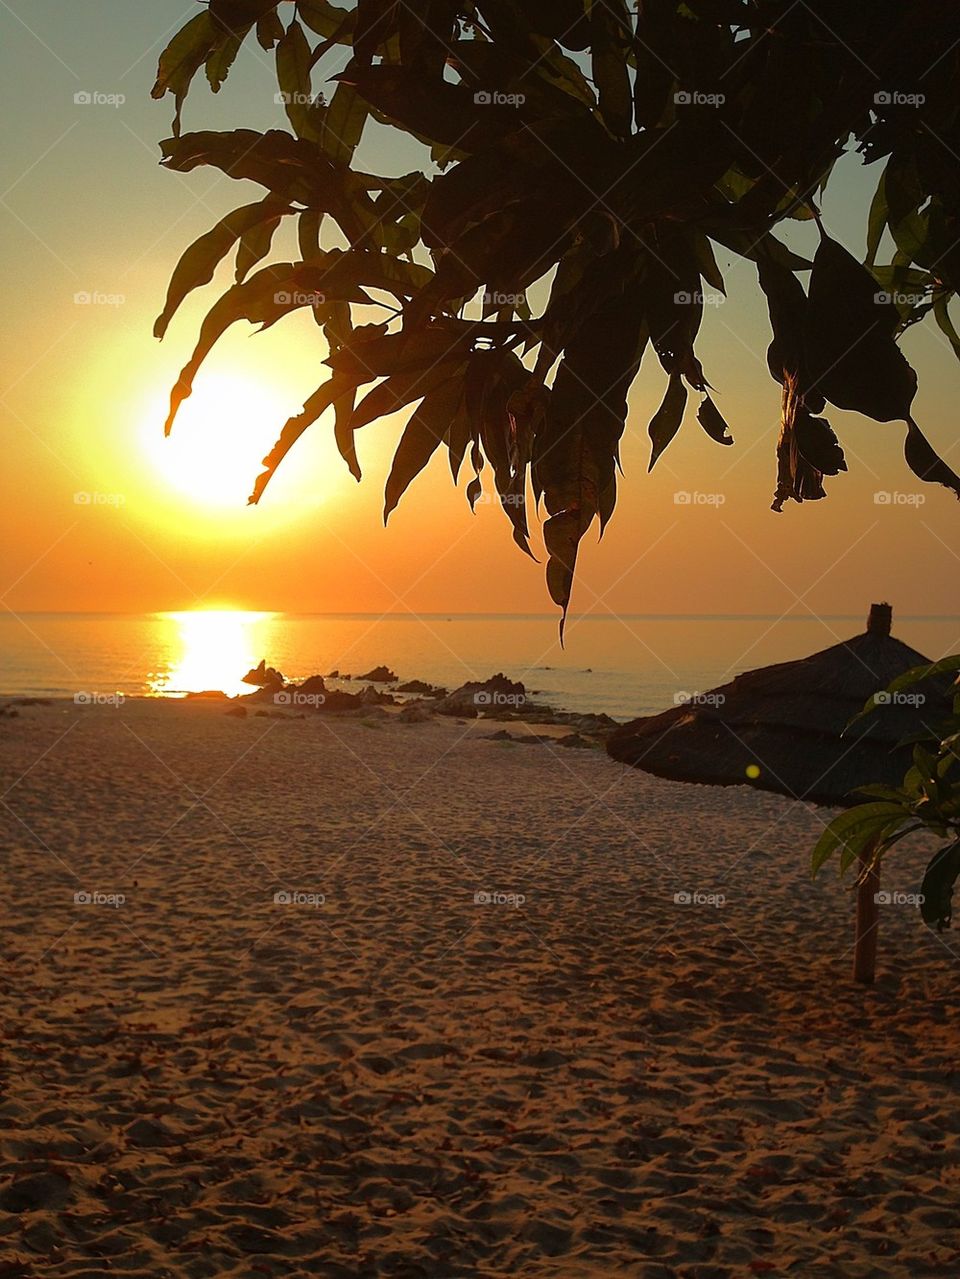 Sunrise in Malawi